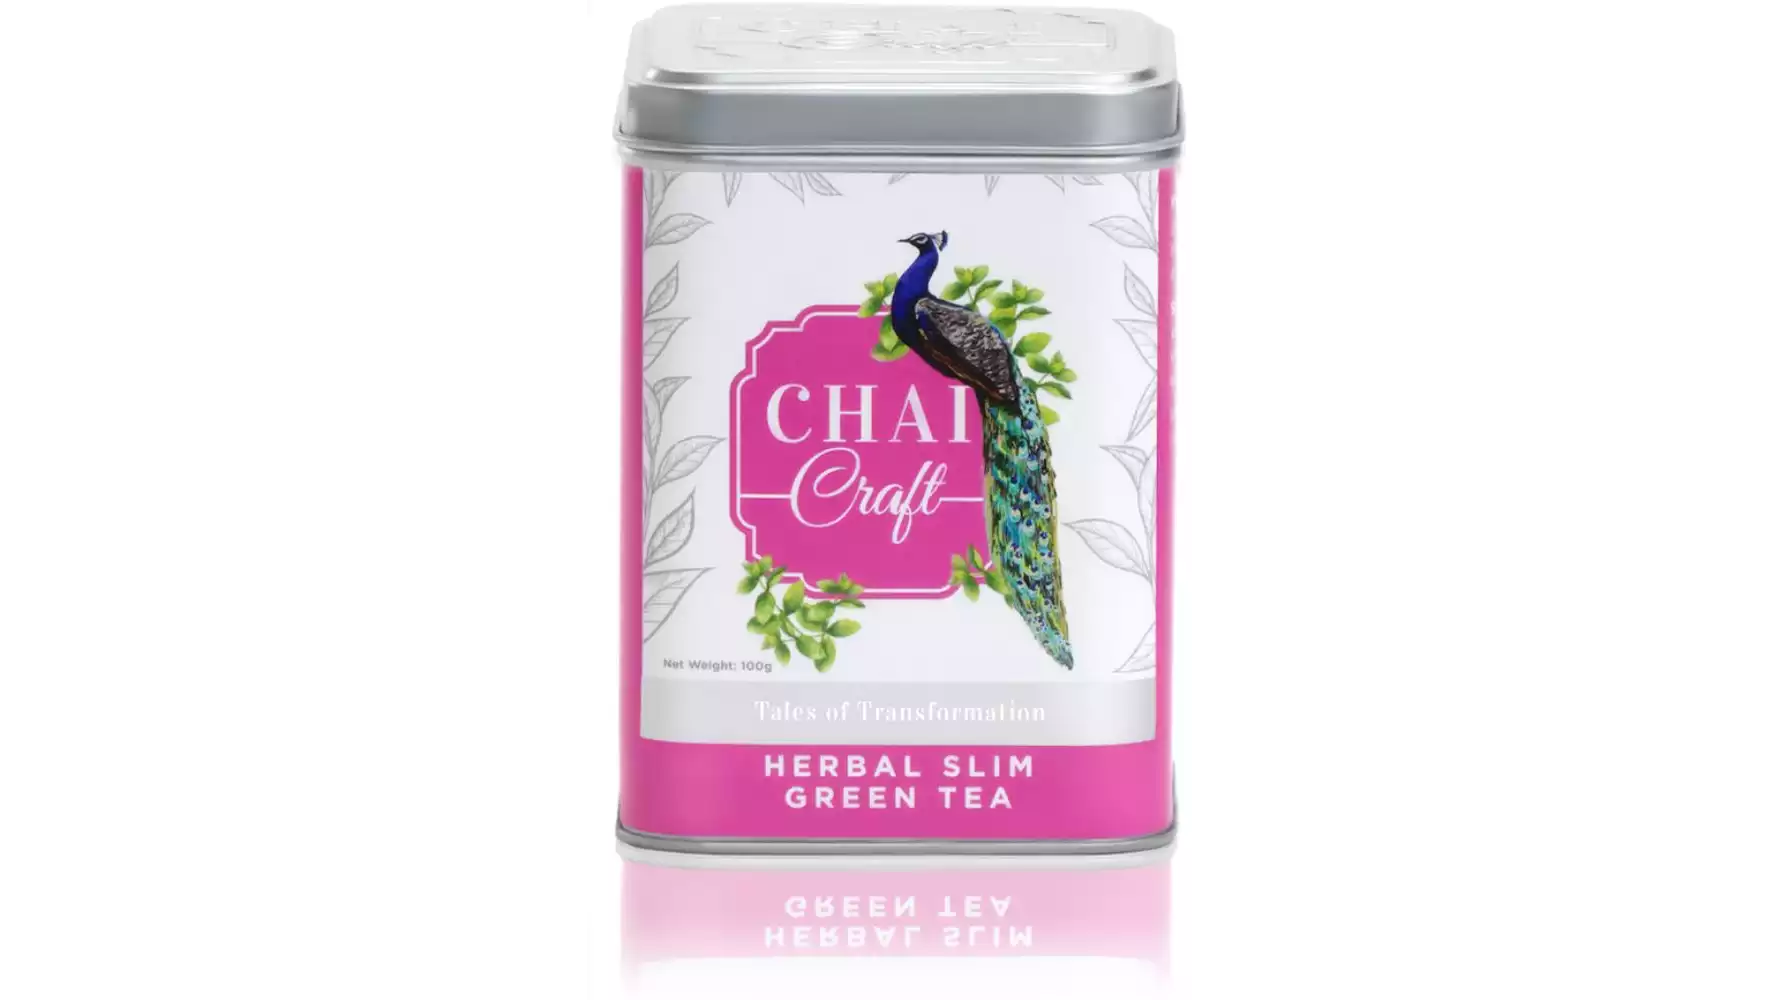 Chai Craft Herbal Slim Green Tea (100g)